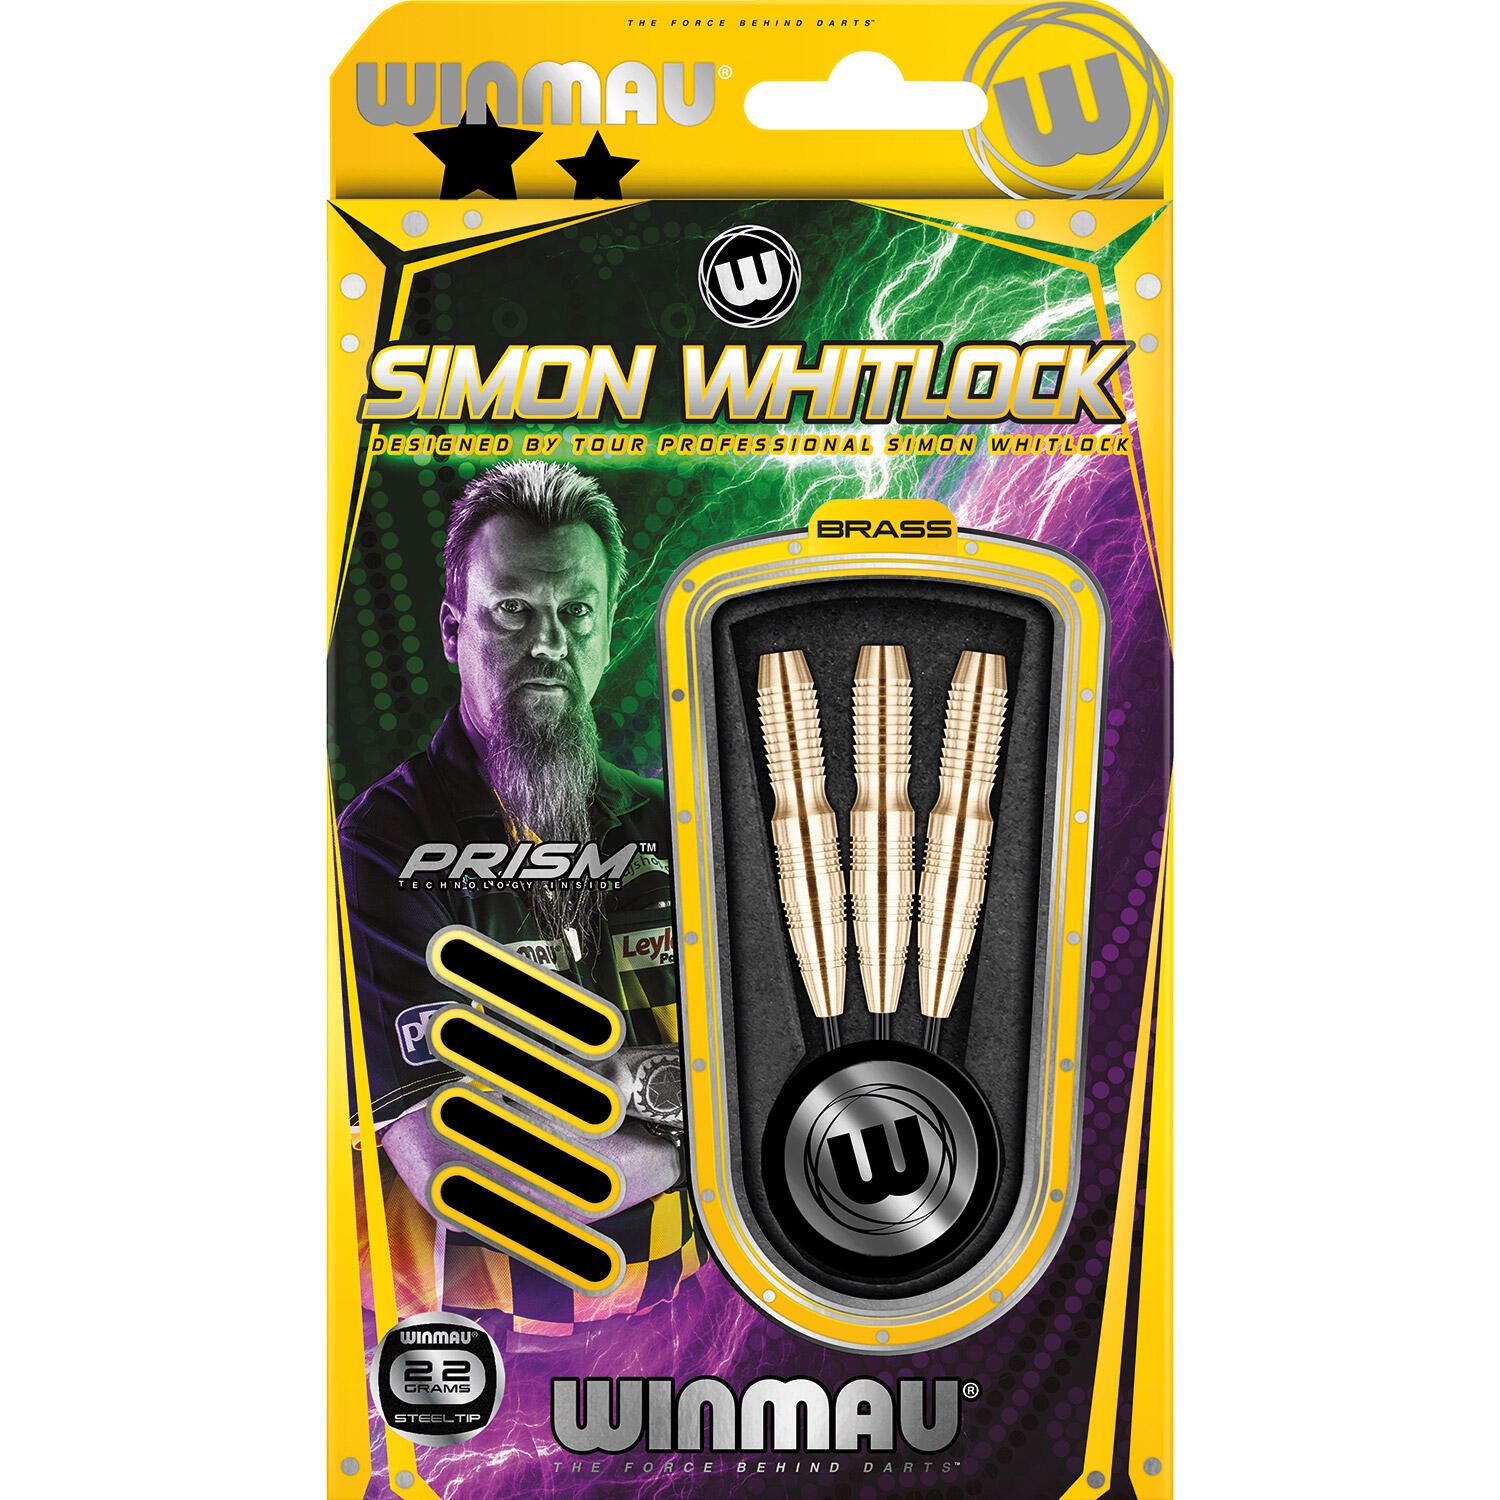 WINMAU Simon Whitlock Brass Steel Tip Darts by Winmau